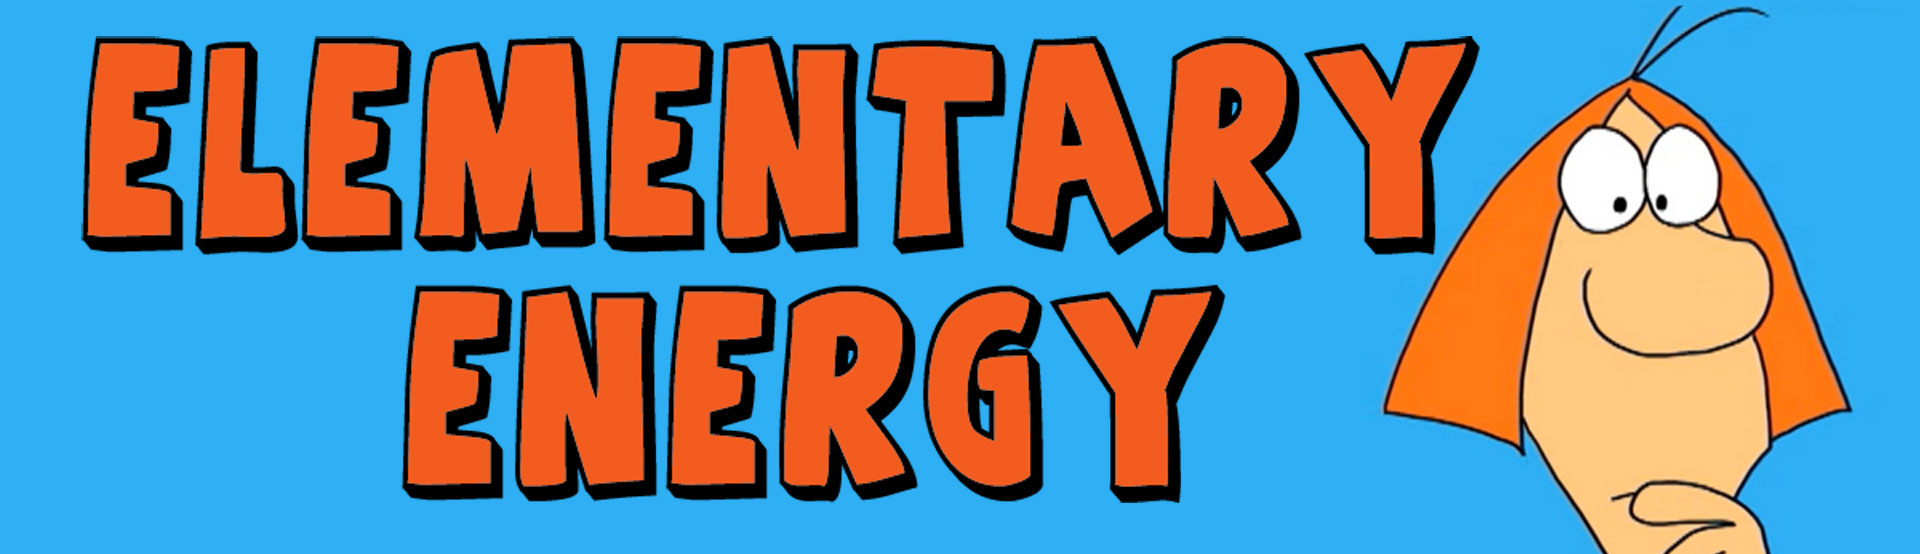 Elementary Energy